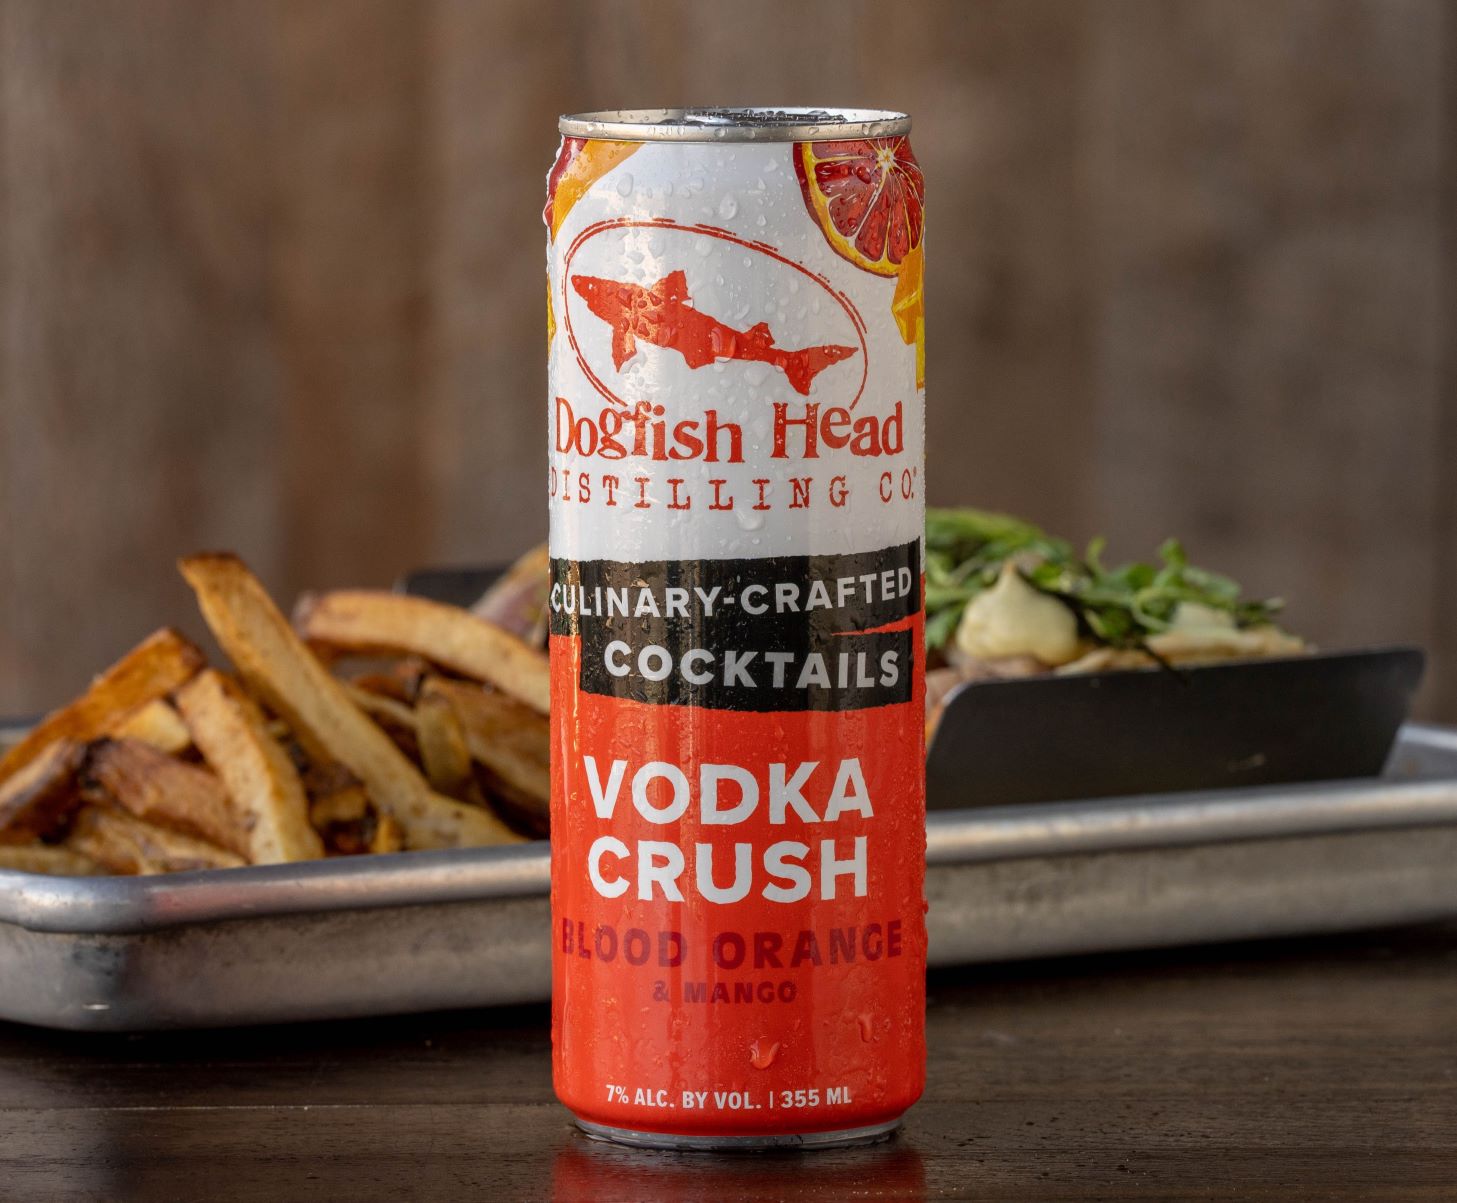 15-dogfish-head-vodka-crush-blood-orange-nutrition-facts